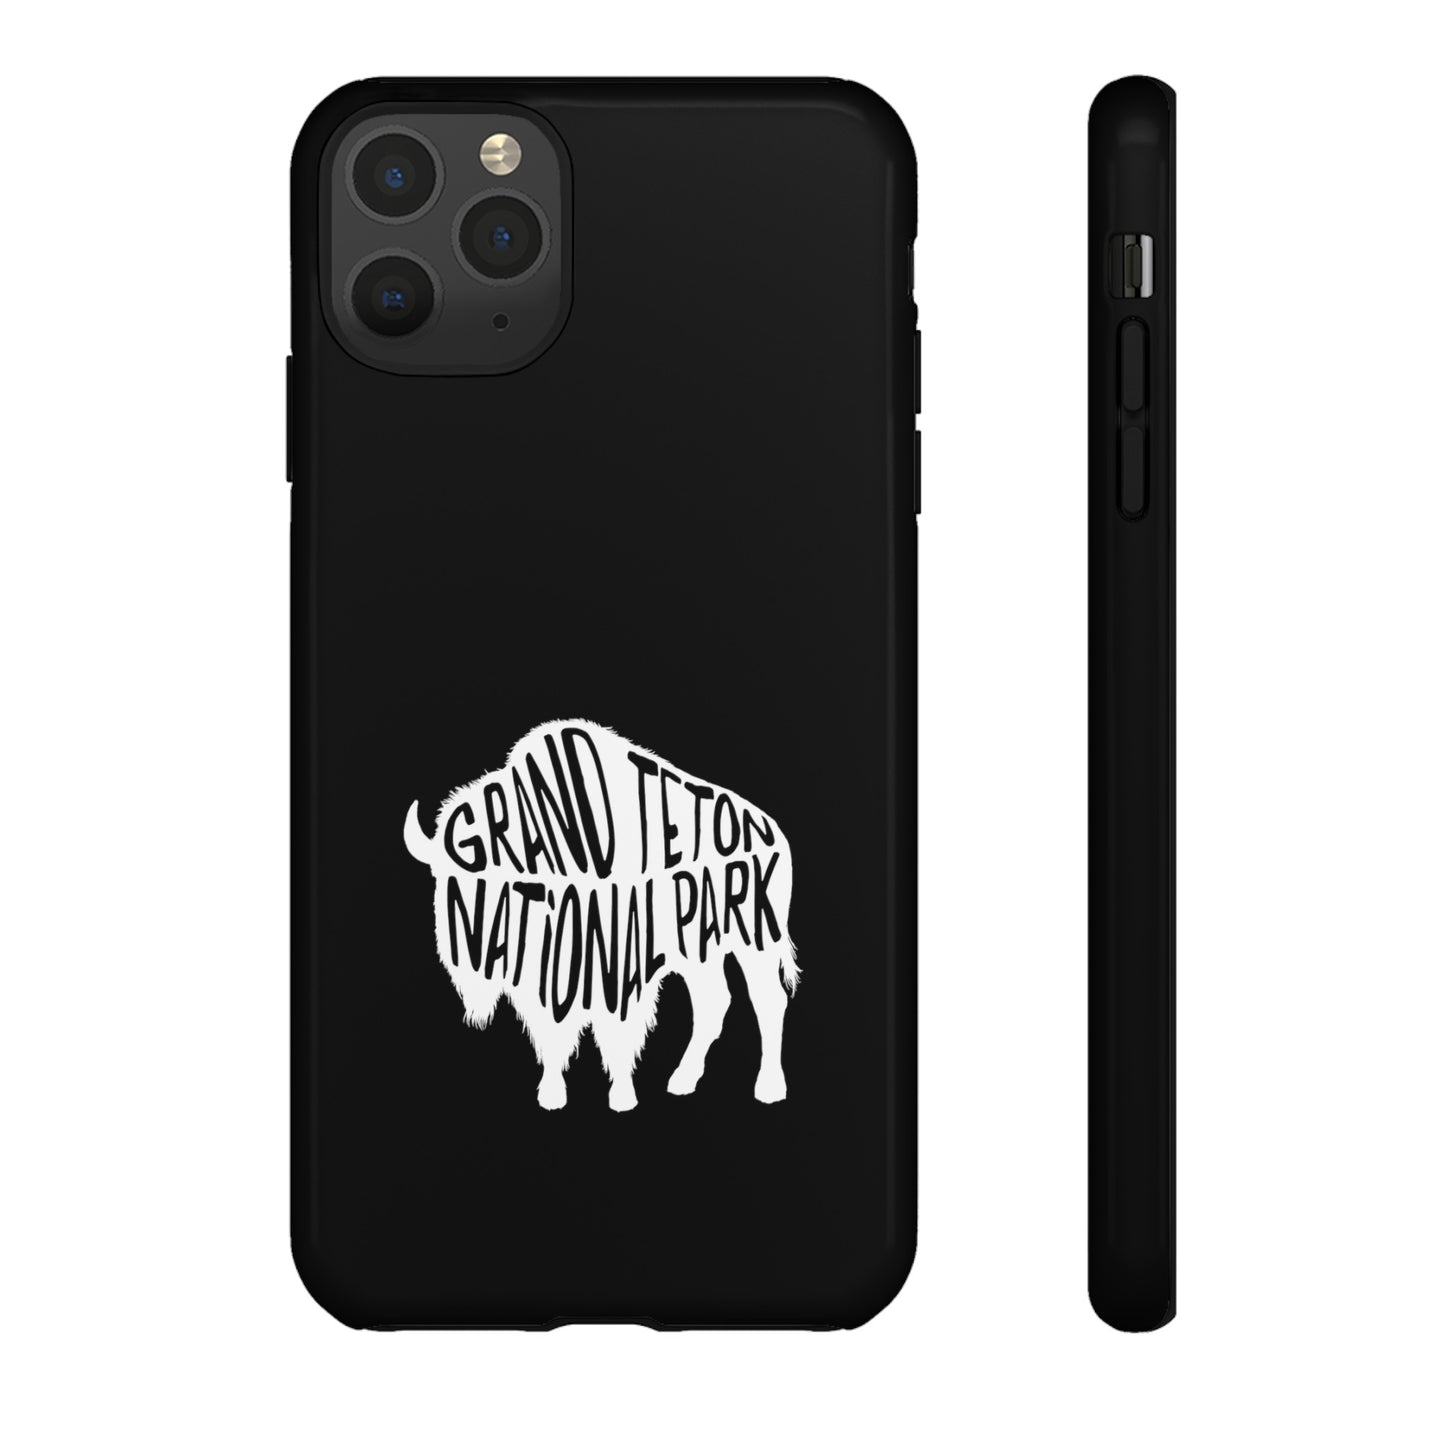 Grand Teton National Park Phone Case - Bison Design